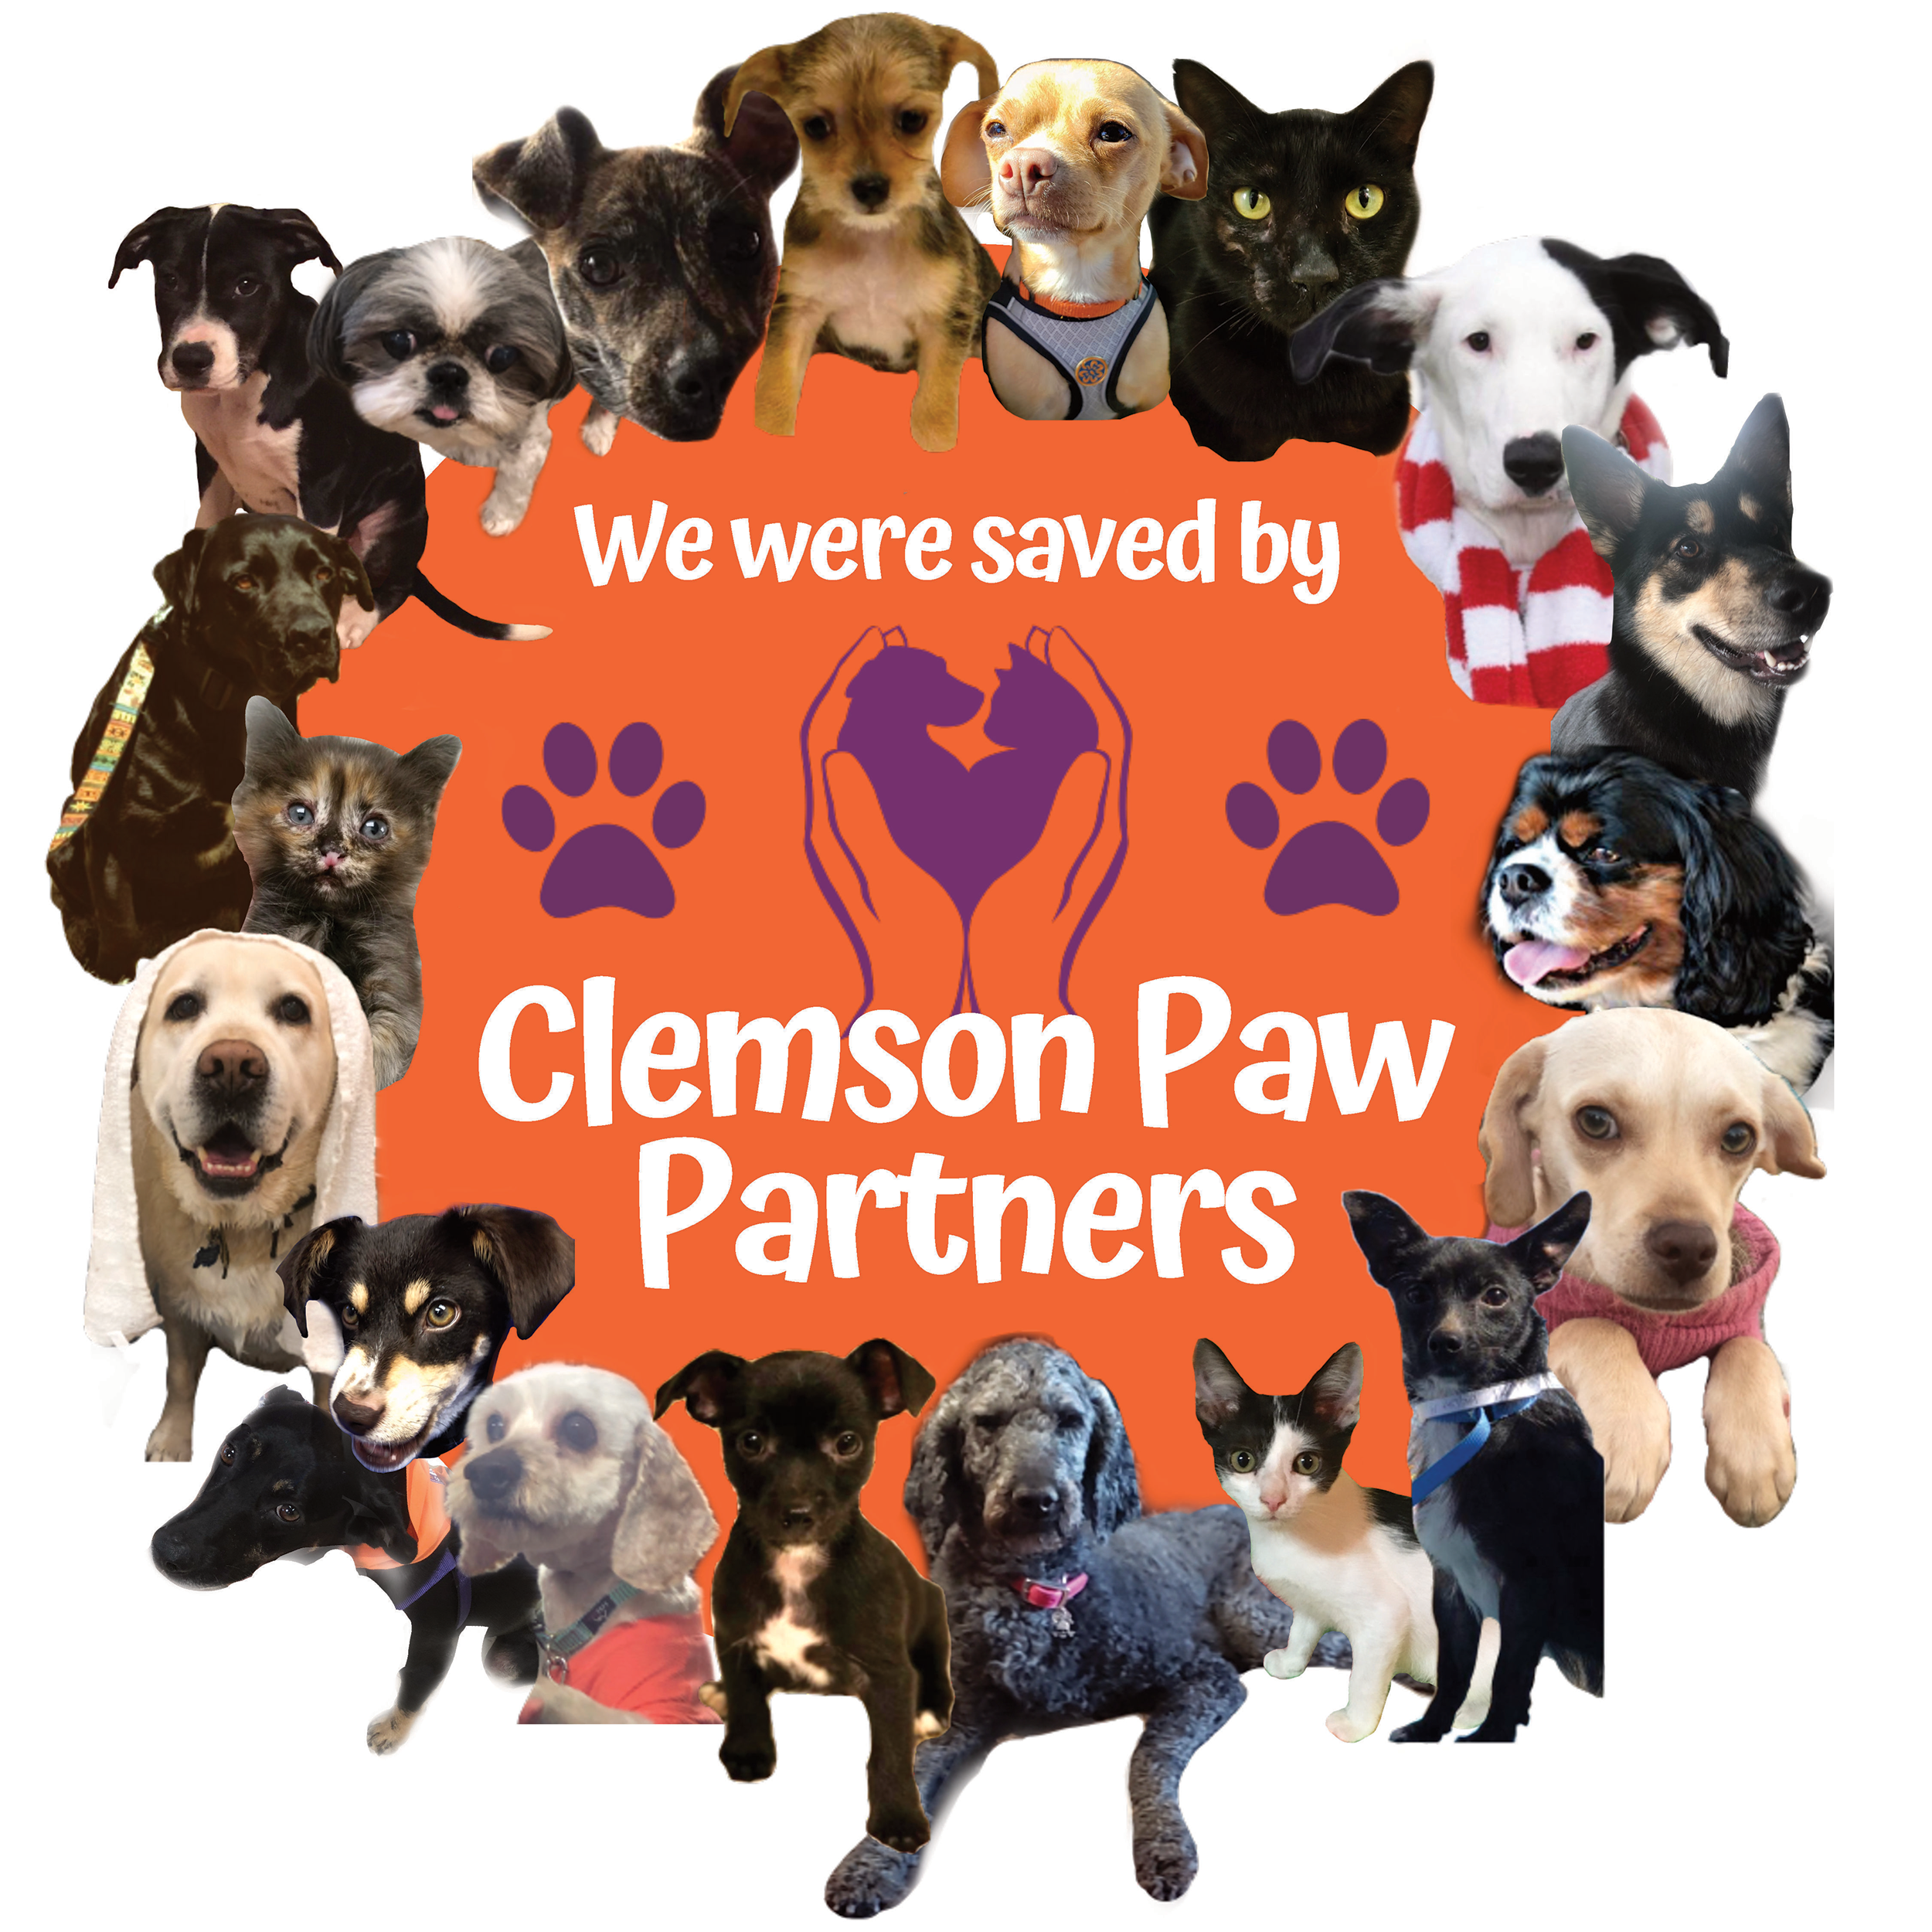 Clemson Paw Partners Saved Animals